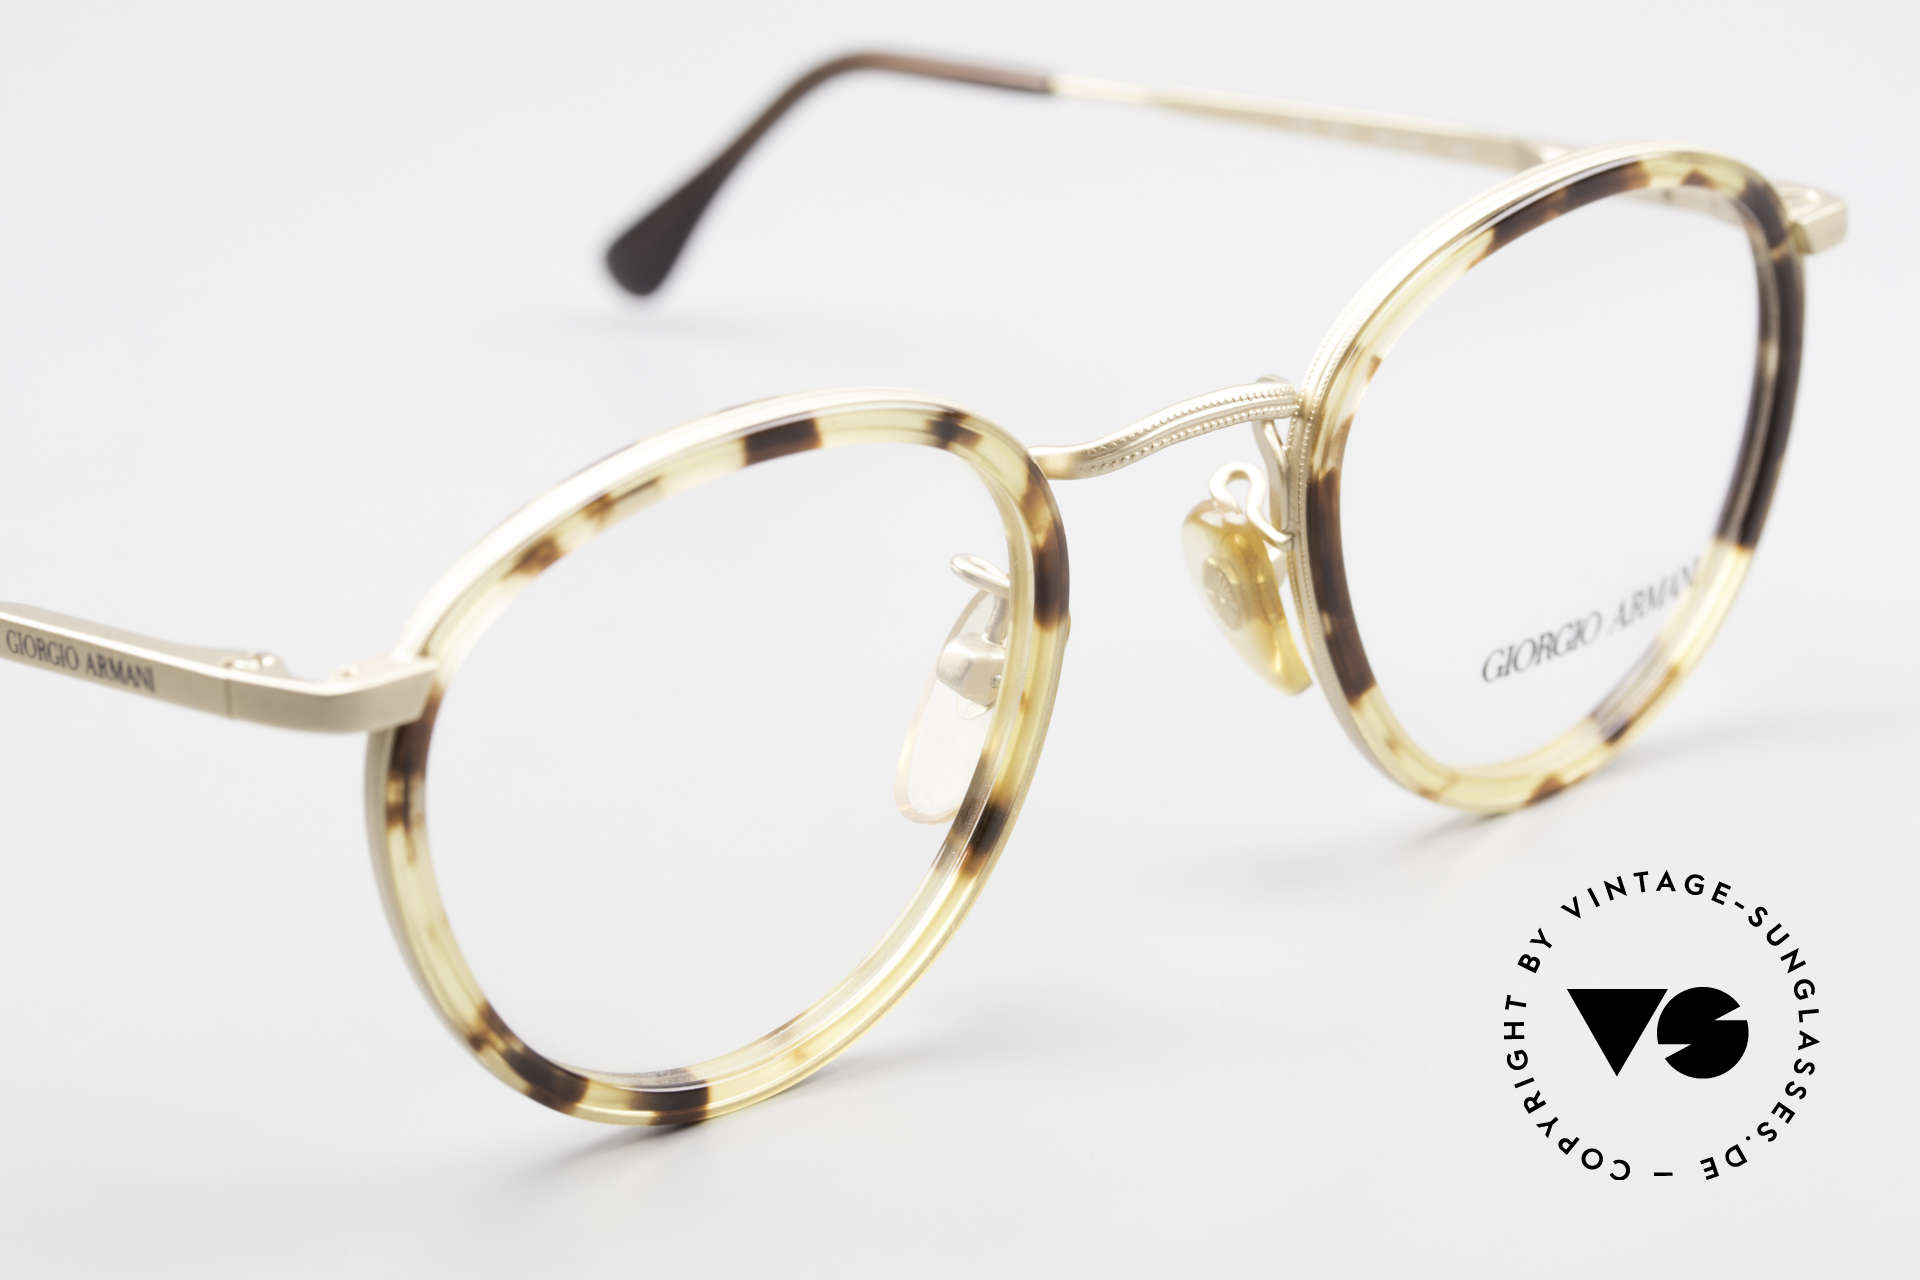 Giorgio Armani 159 Panto Glasses Windsor Rings, unworn, NOS (like all our vintage designer eyewear), Made for Men